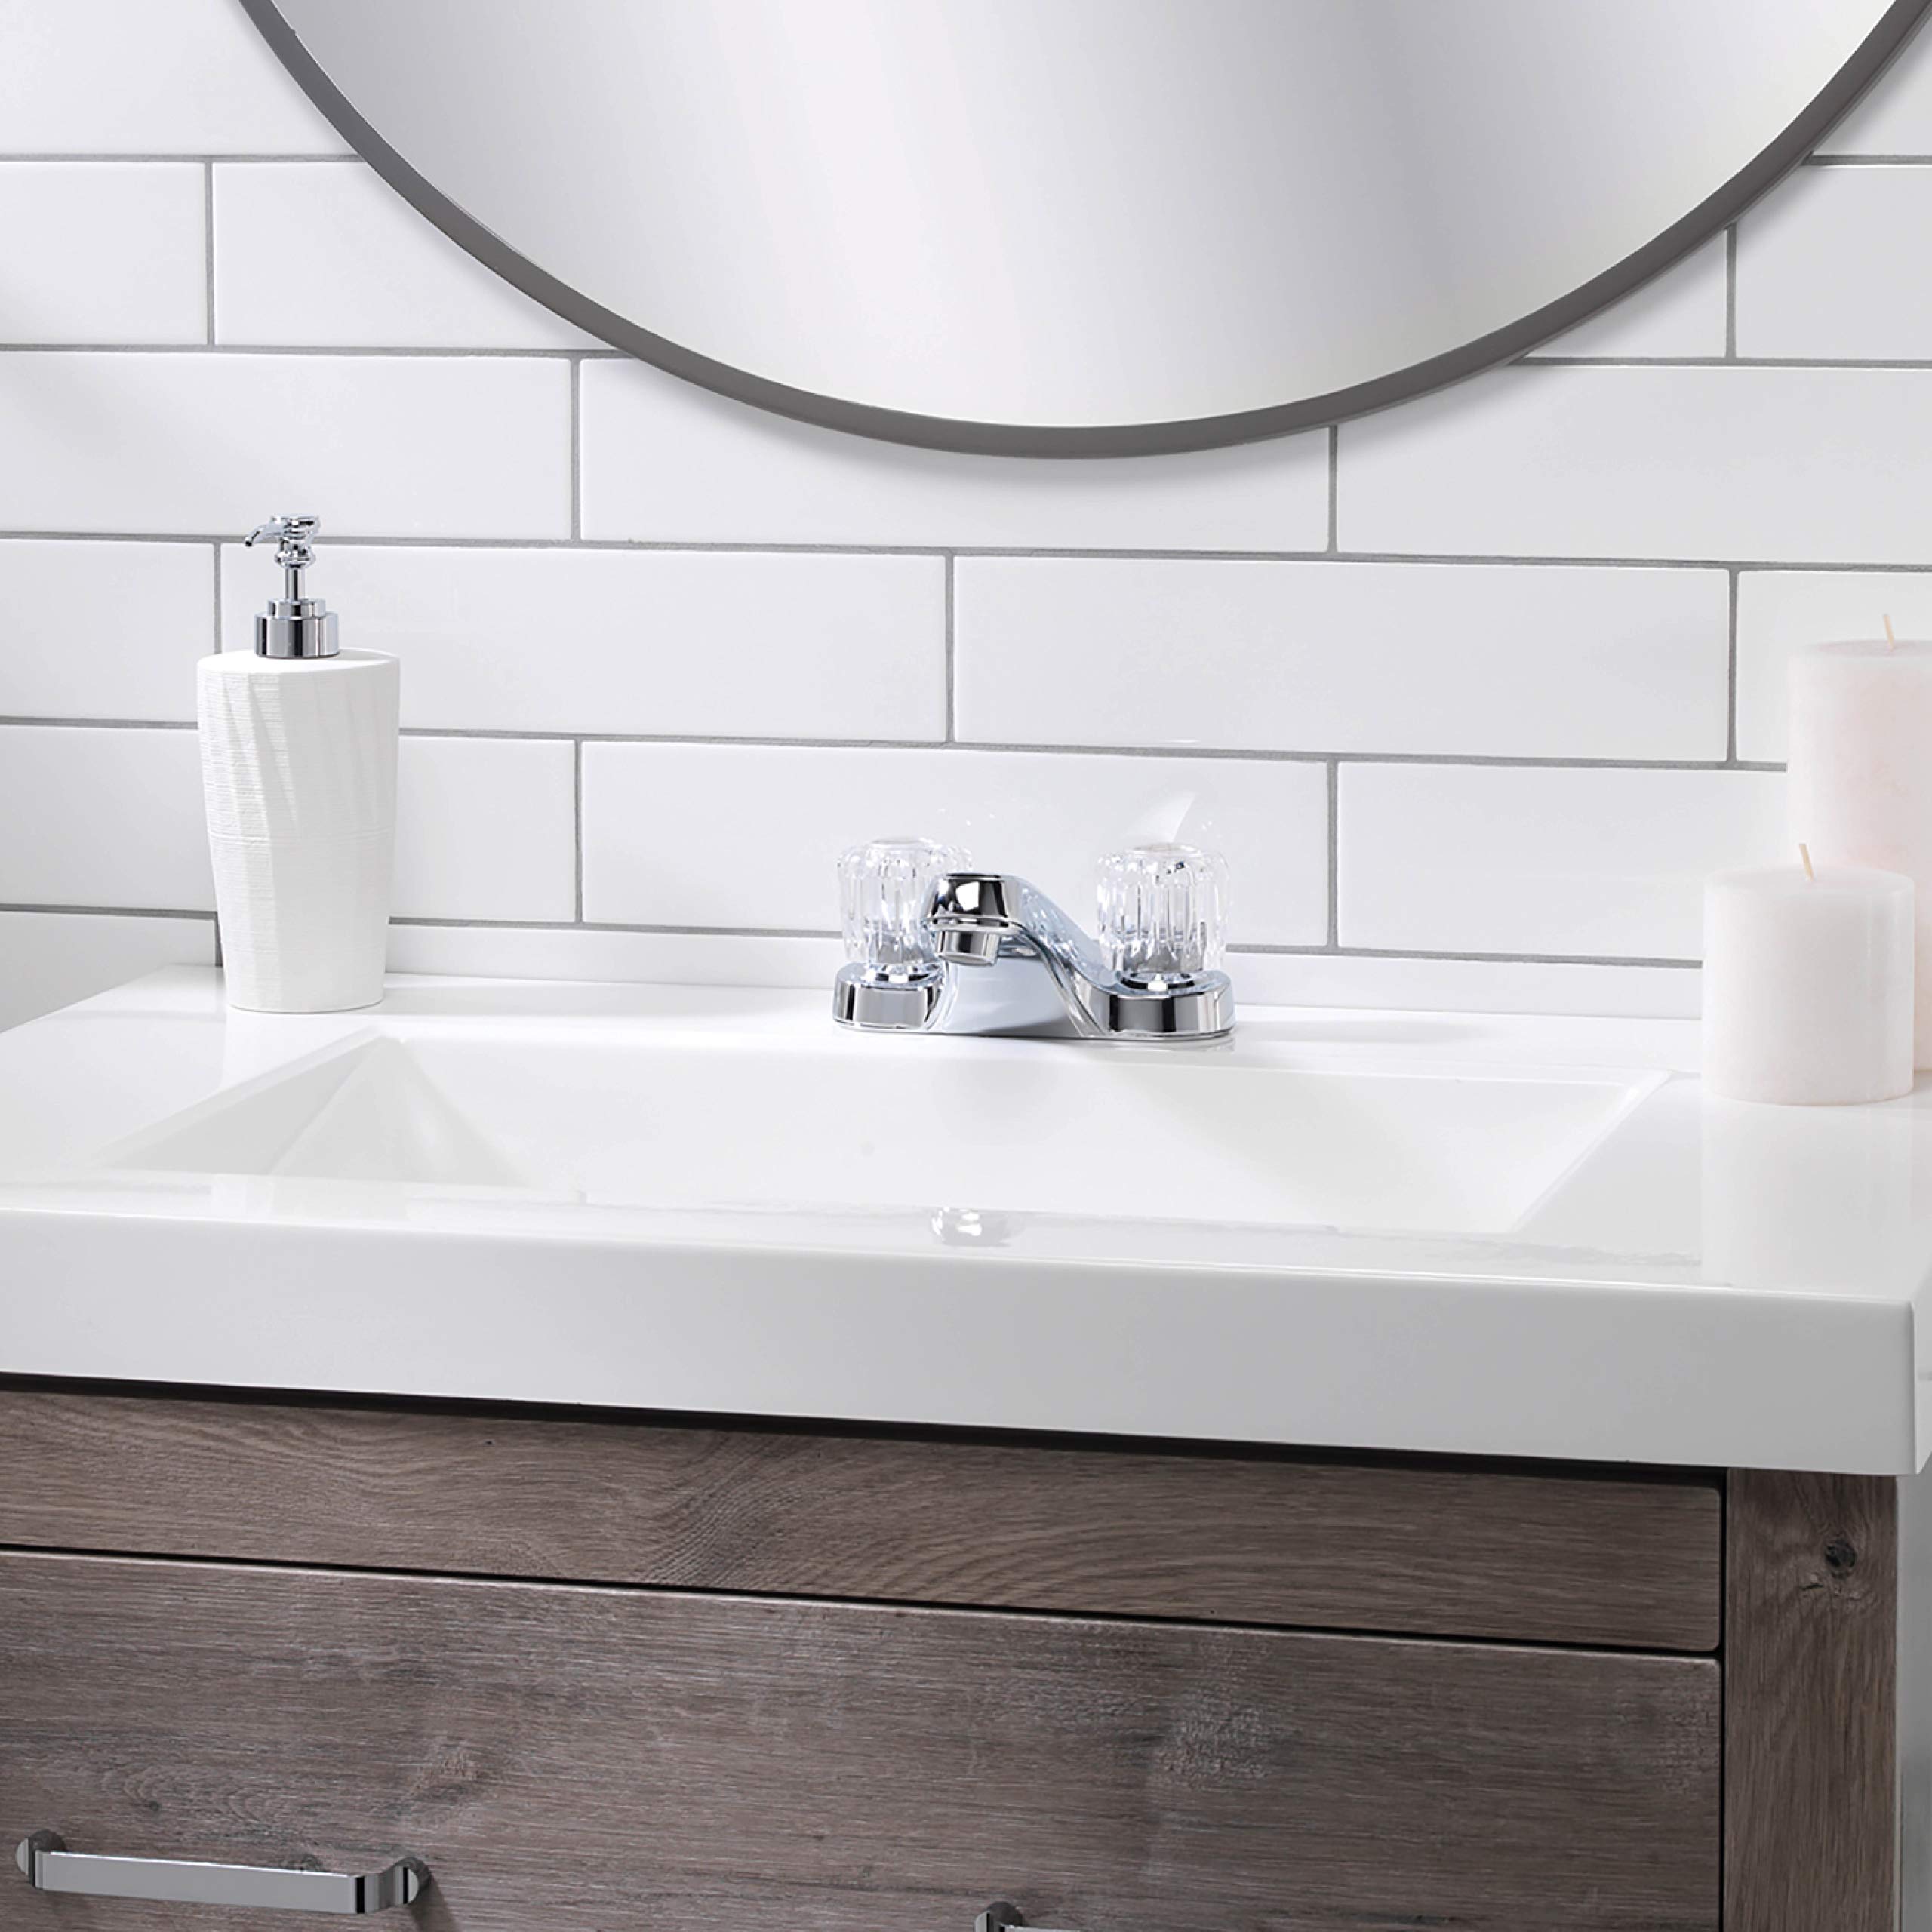 Aqua Vista 10-B421-AV Two Handle Bathroom Sink Faucet, Polished Chrome with Acrylic Round Knobs